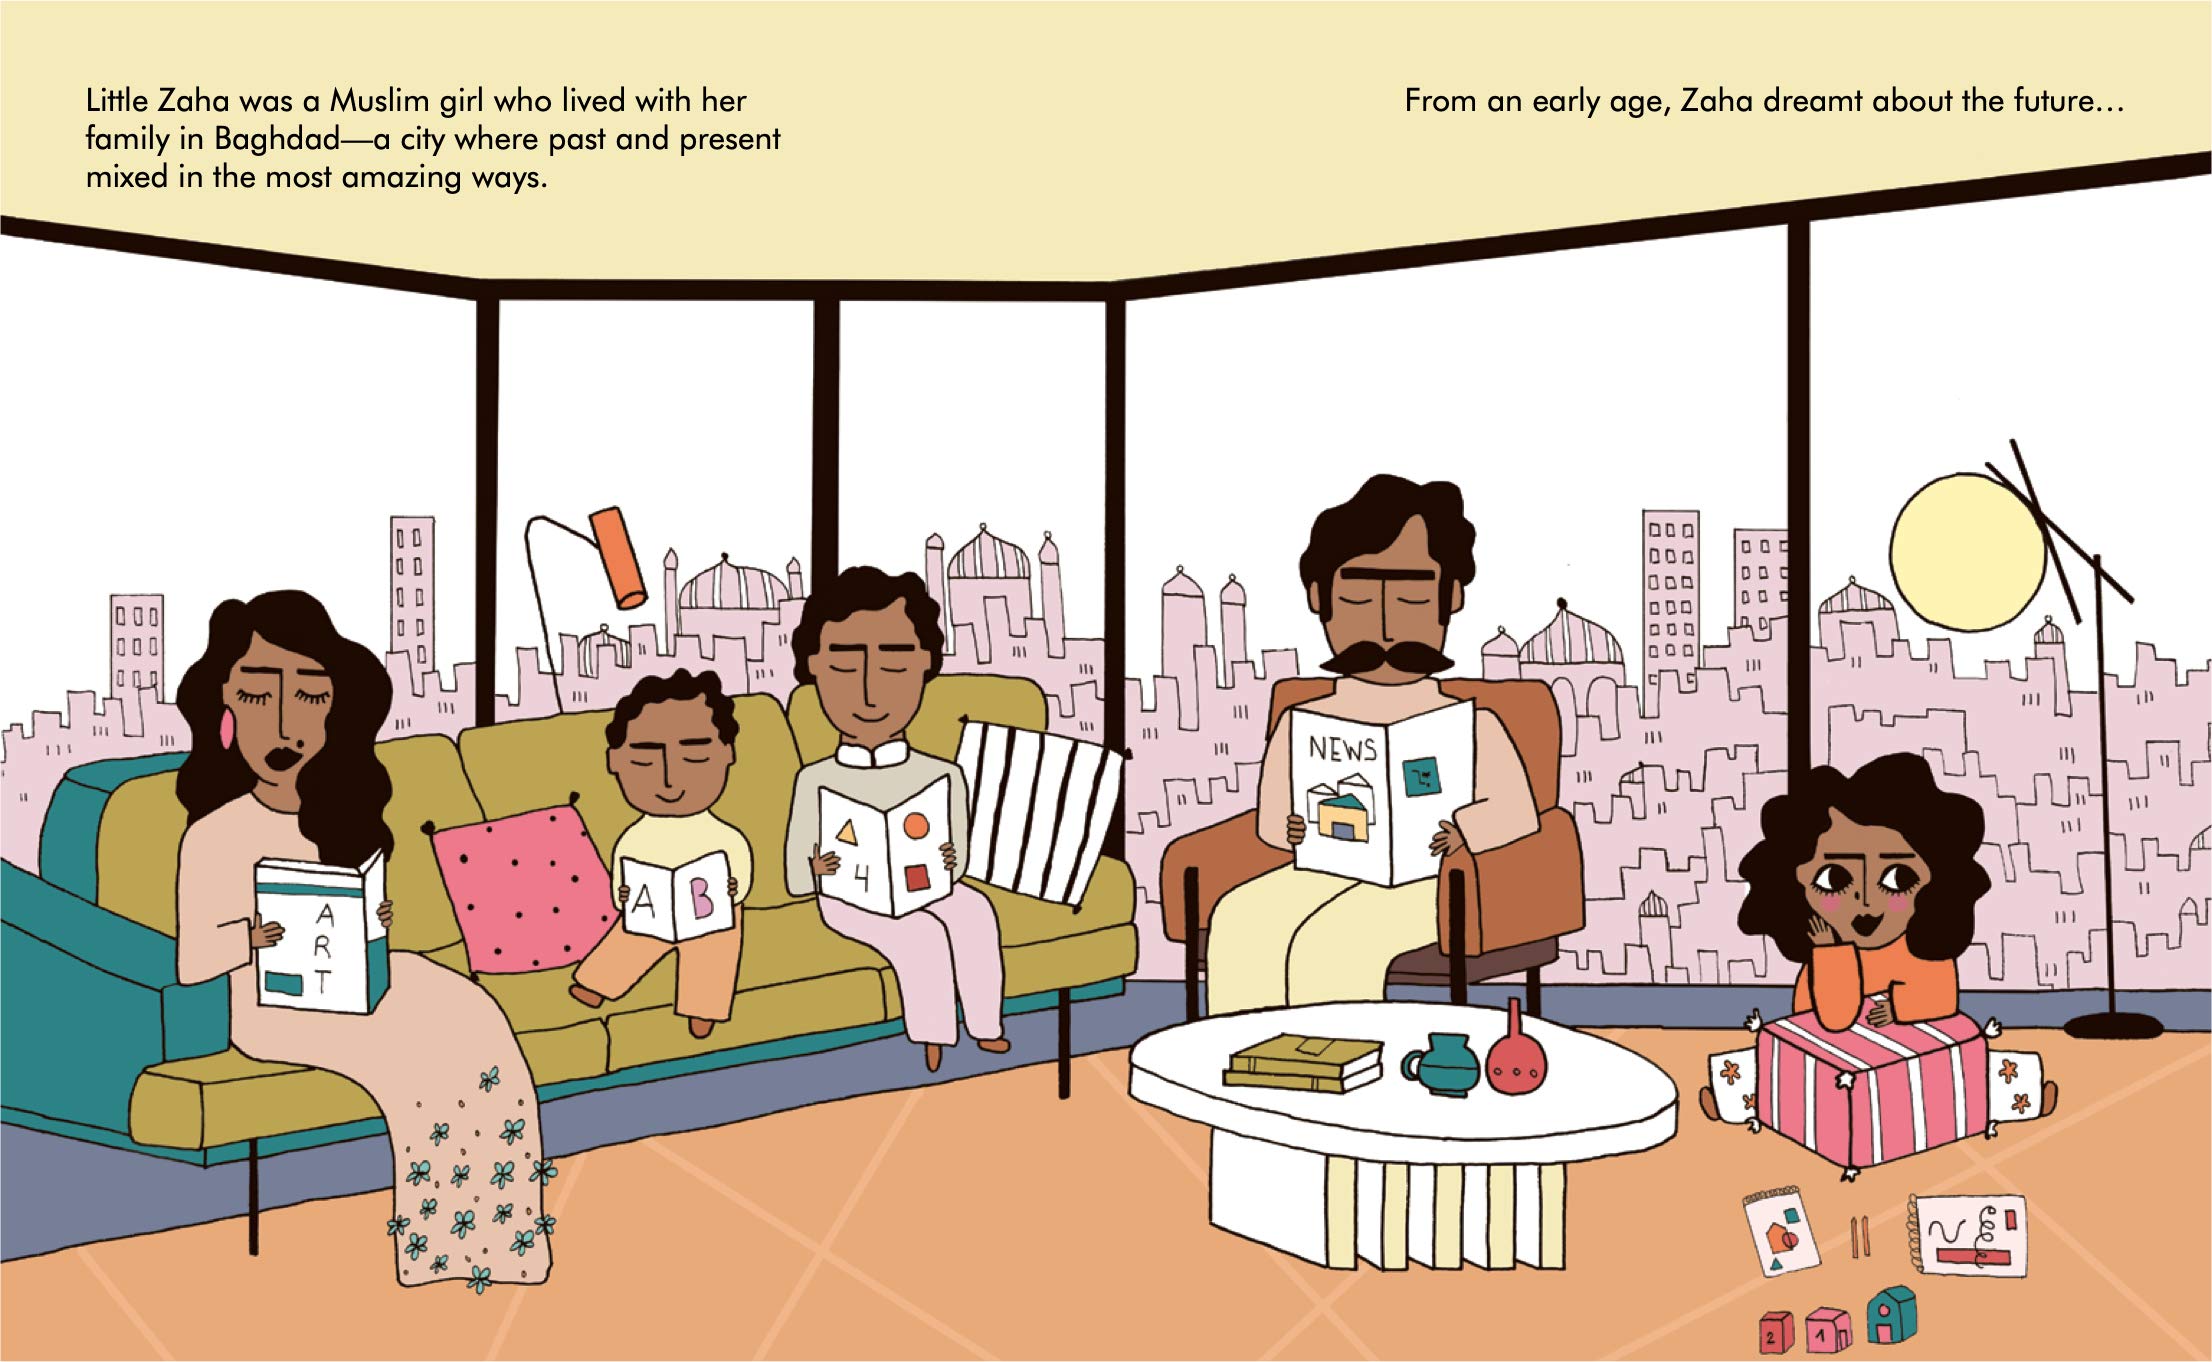 Little People, Big Dreams: Zaha Hadid | Kids Book - Lifestory - Bookspeed